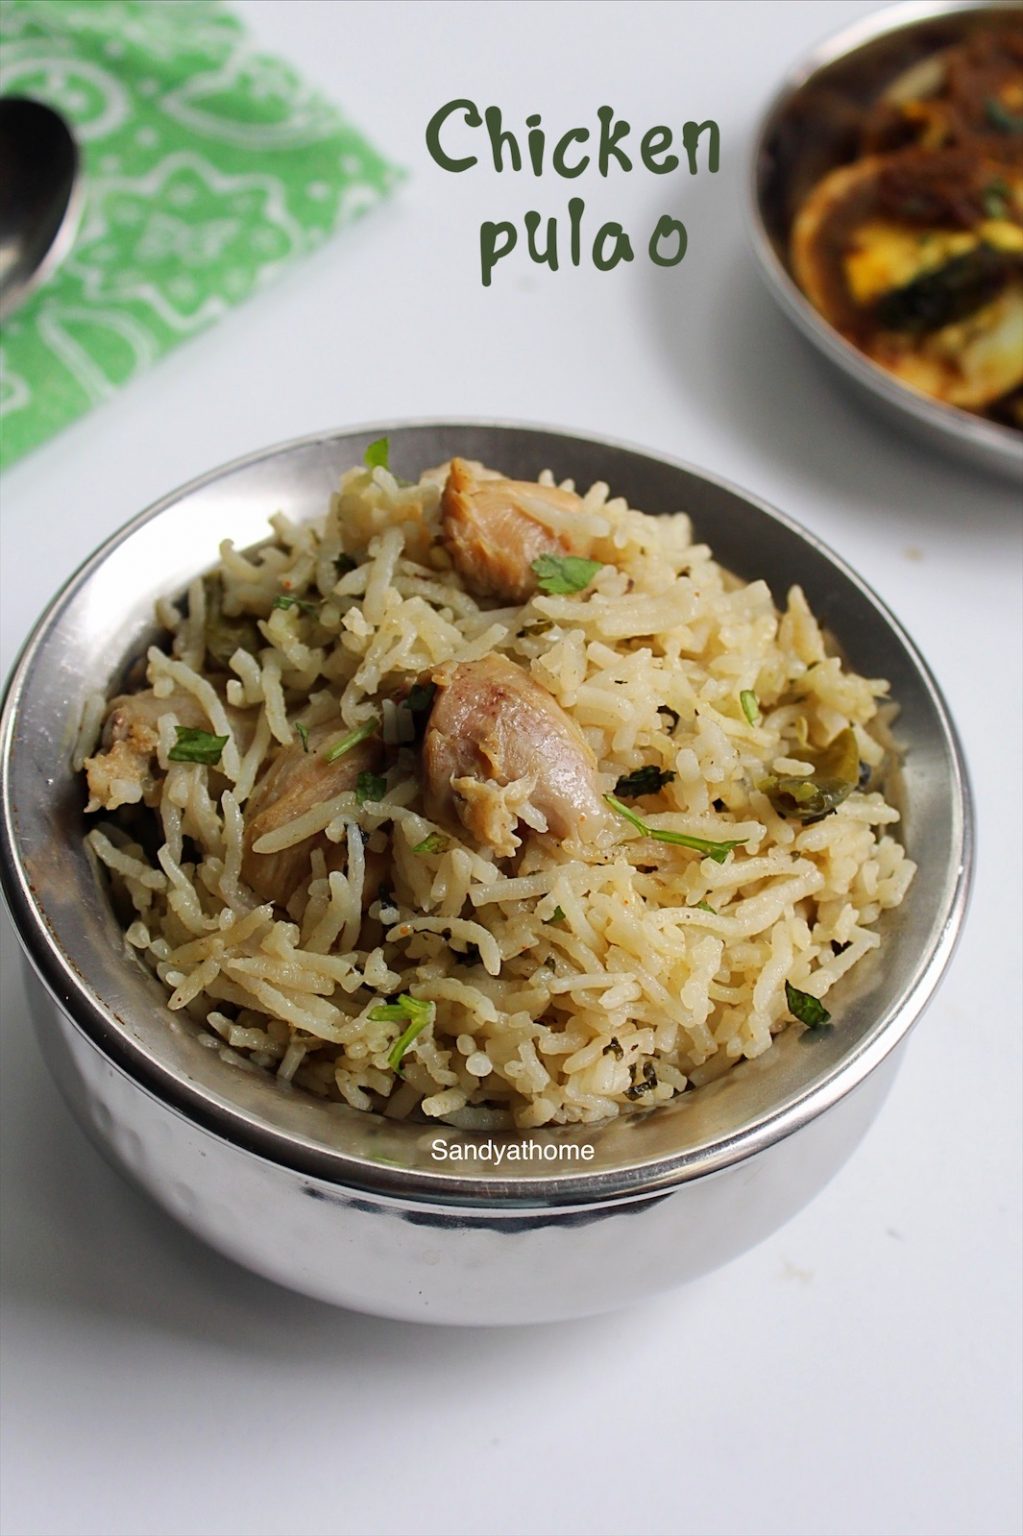 Chicken pulao recipe, Chicken pulao with coconut milk - Sandhya's recipes